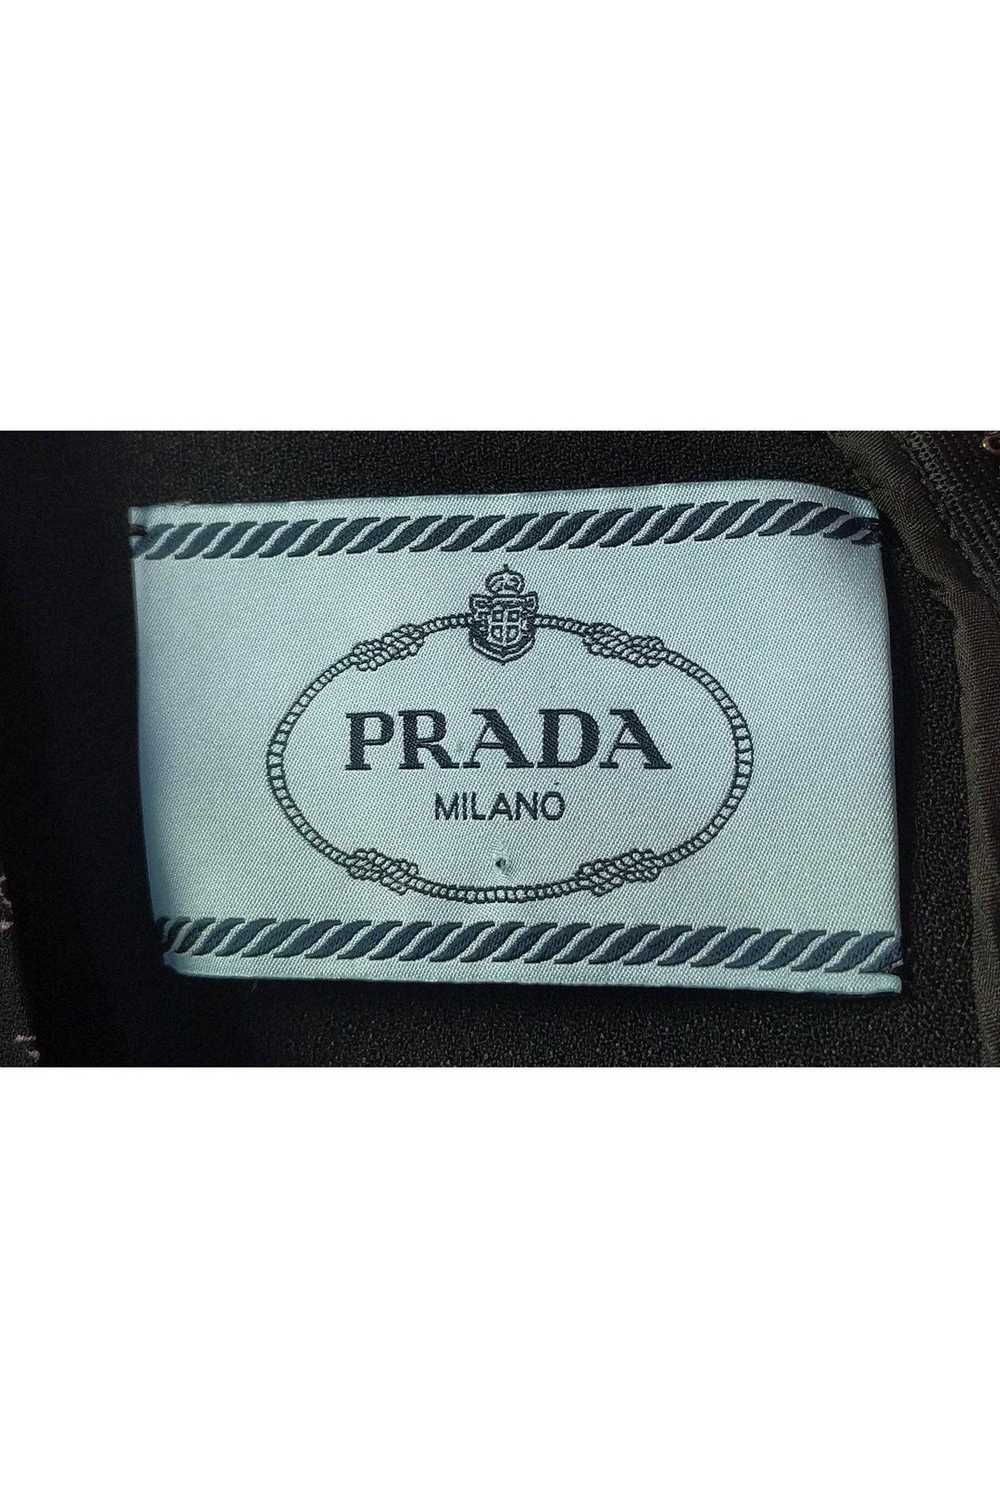 Prada - Black, Grey & Lavender Floral Dress Sz 2 - image 5